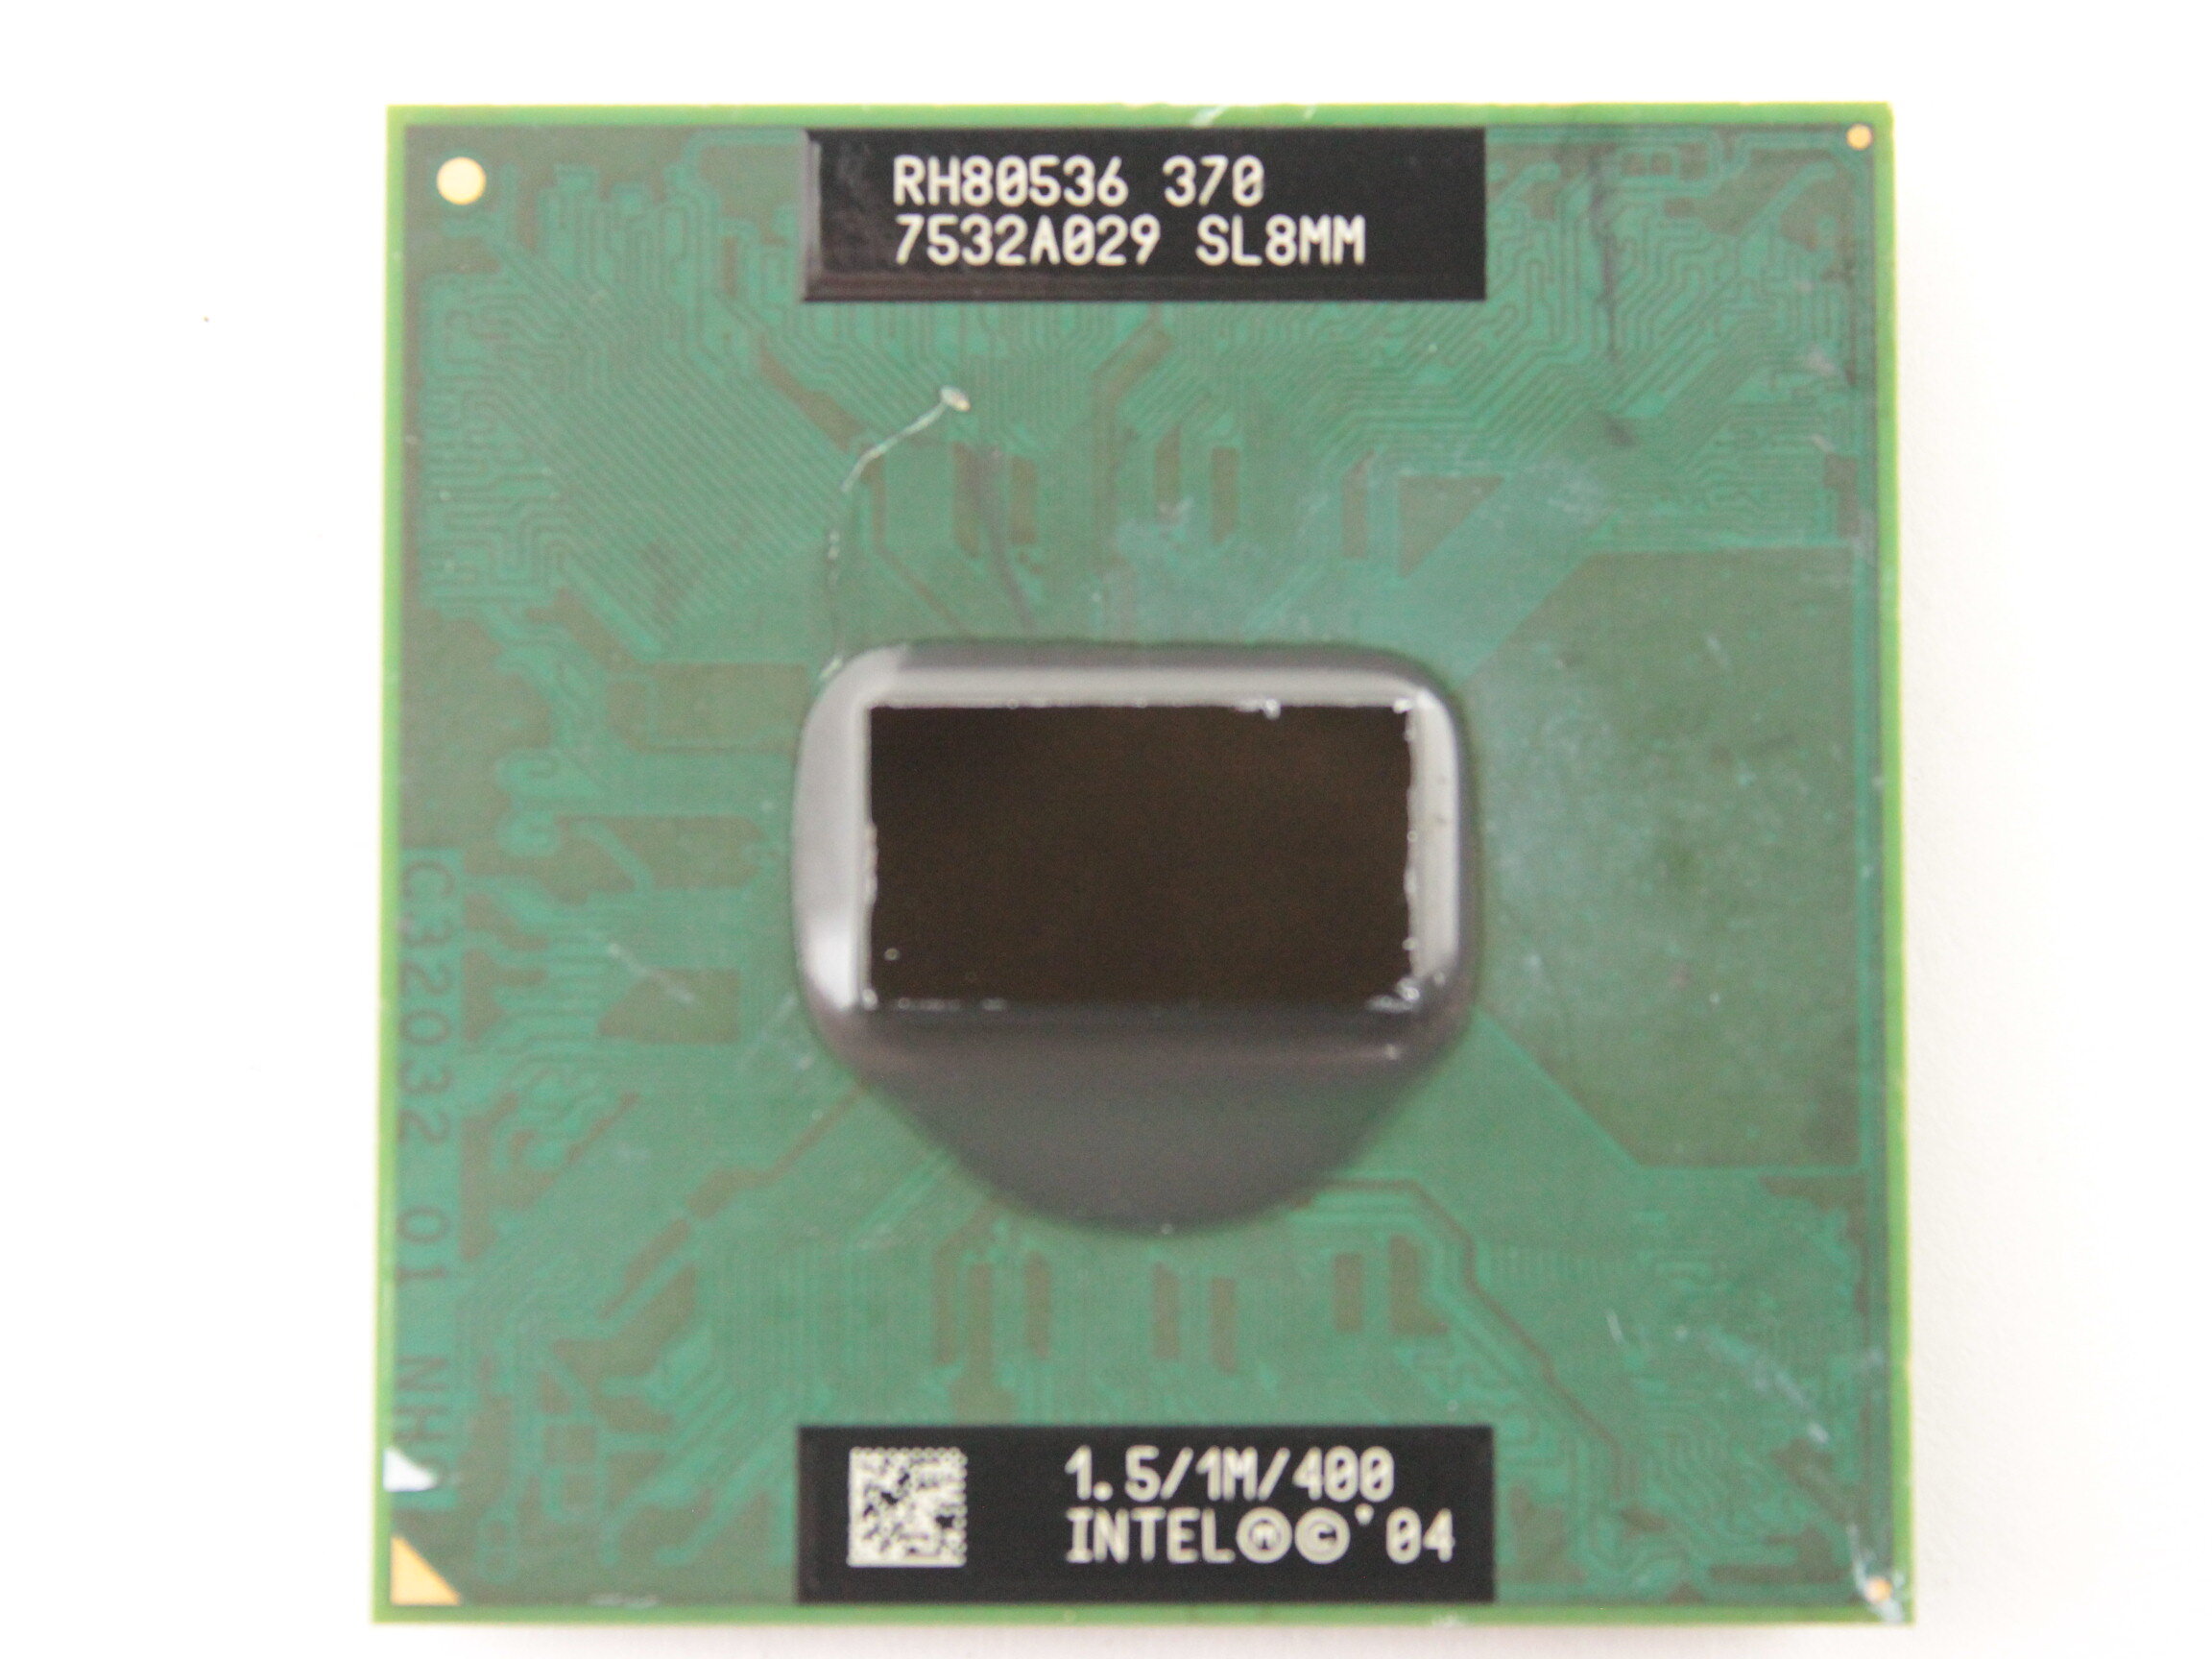 Процессор для ноутбука Intel Celeron M370 (1M Cache 150 GHz 400 MHz) [SL8MM]